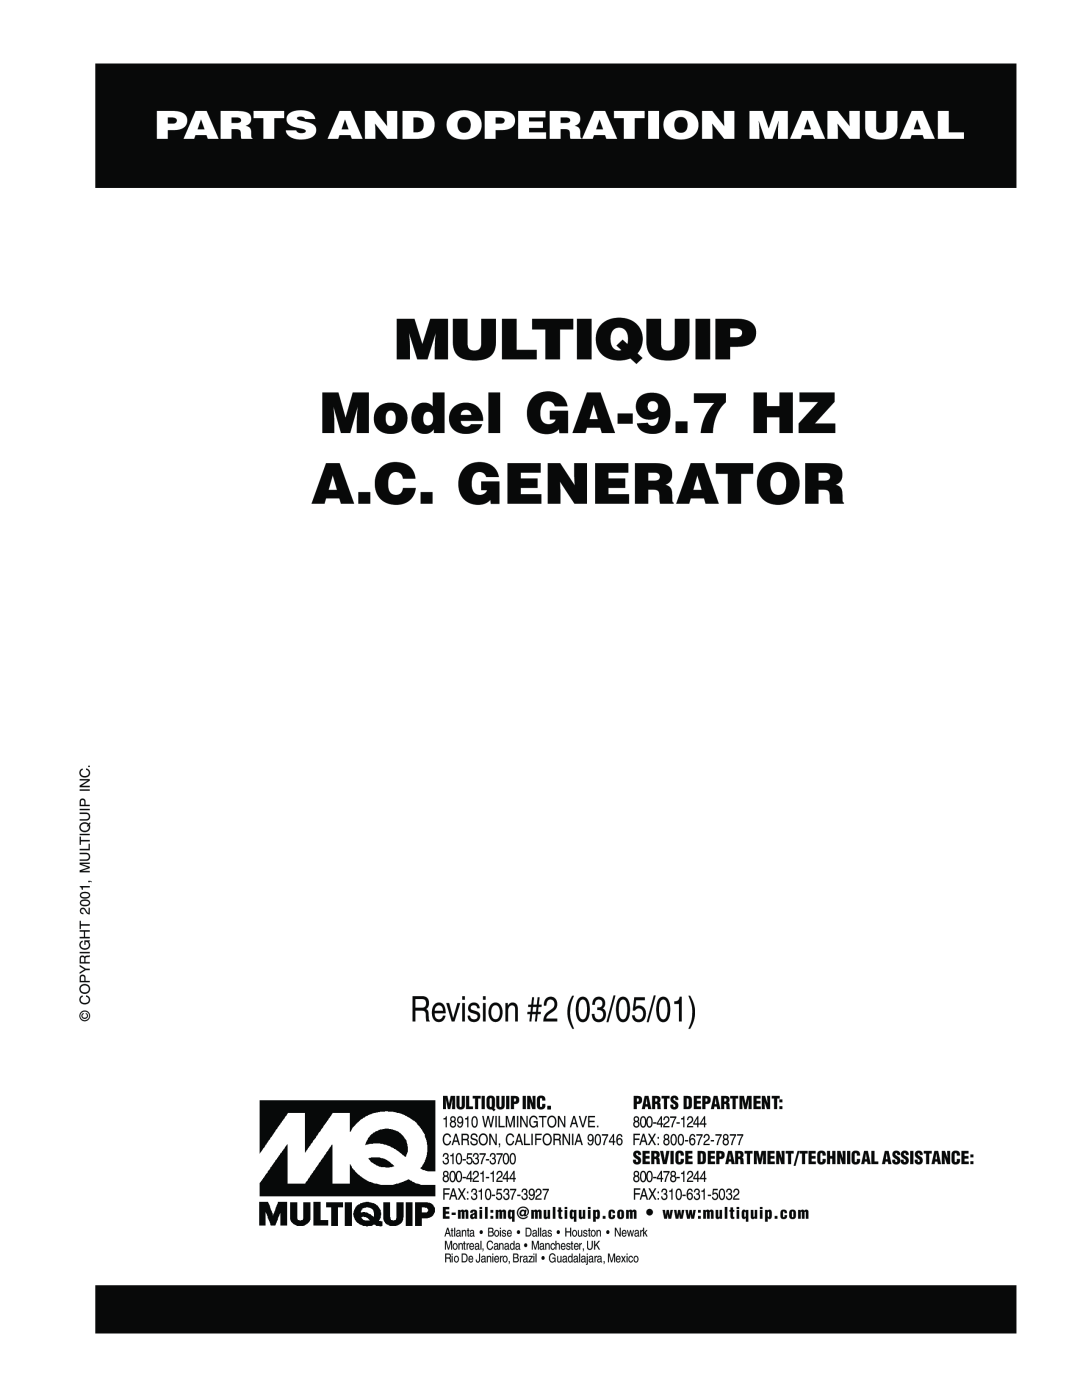 Multiquip GA-9.7 HZ operation manual MULTIQUIP Model GA-9.7HZ A.C. GENERATOR, Parts And Operation Manual, Multiquip Inc 